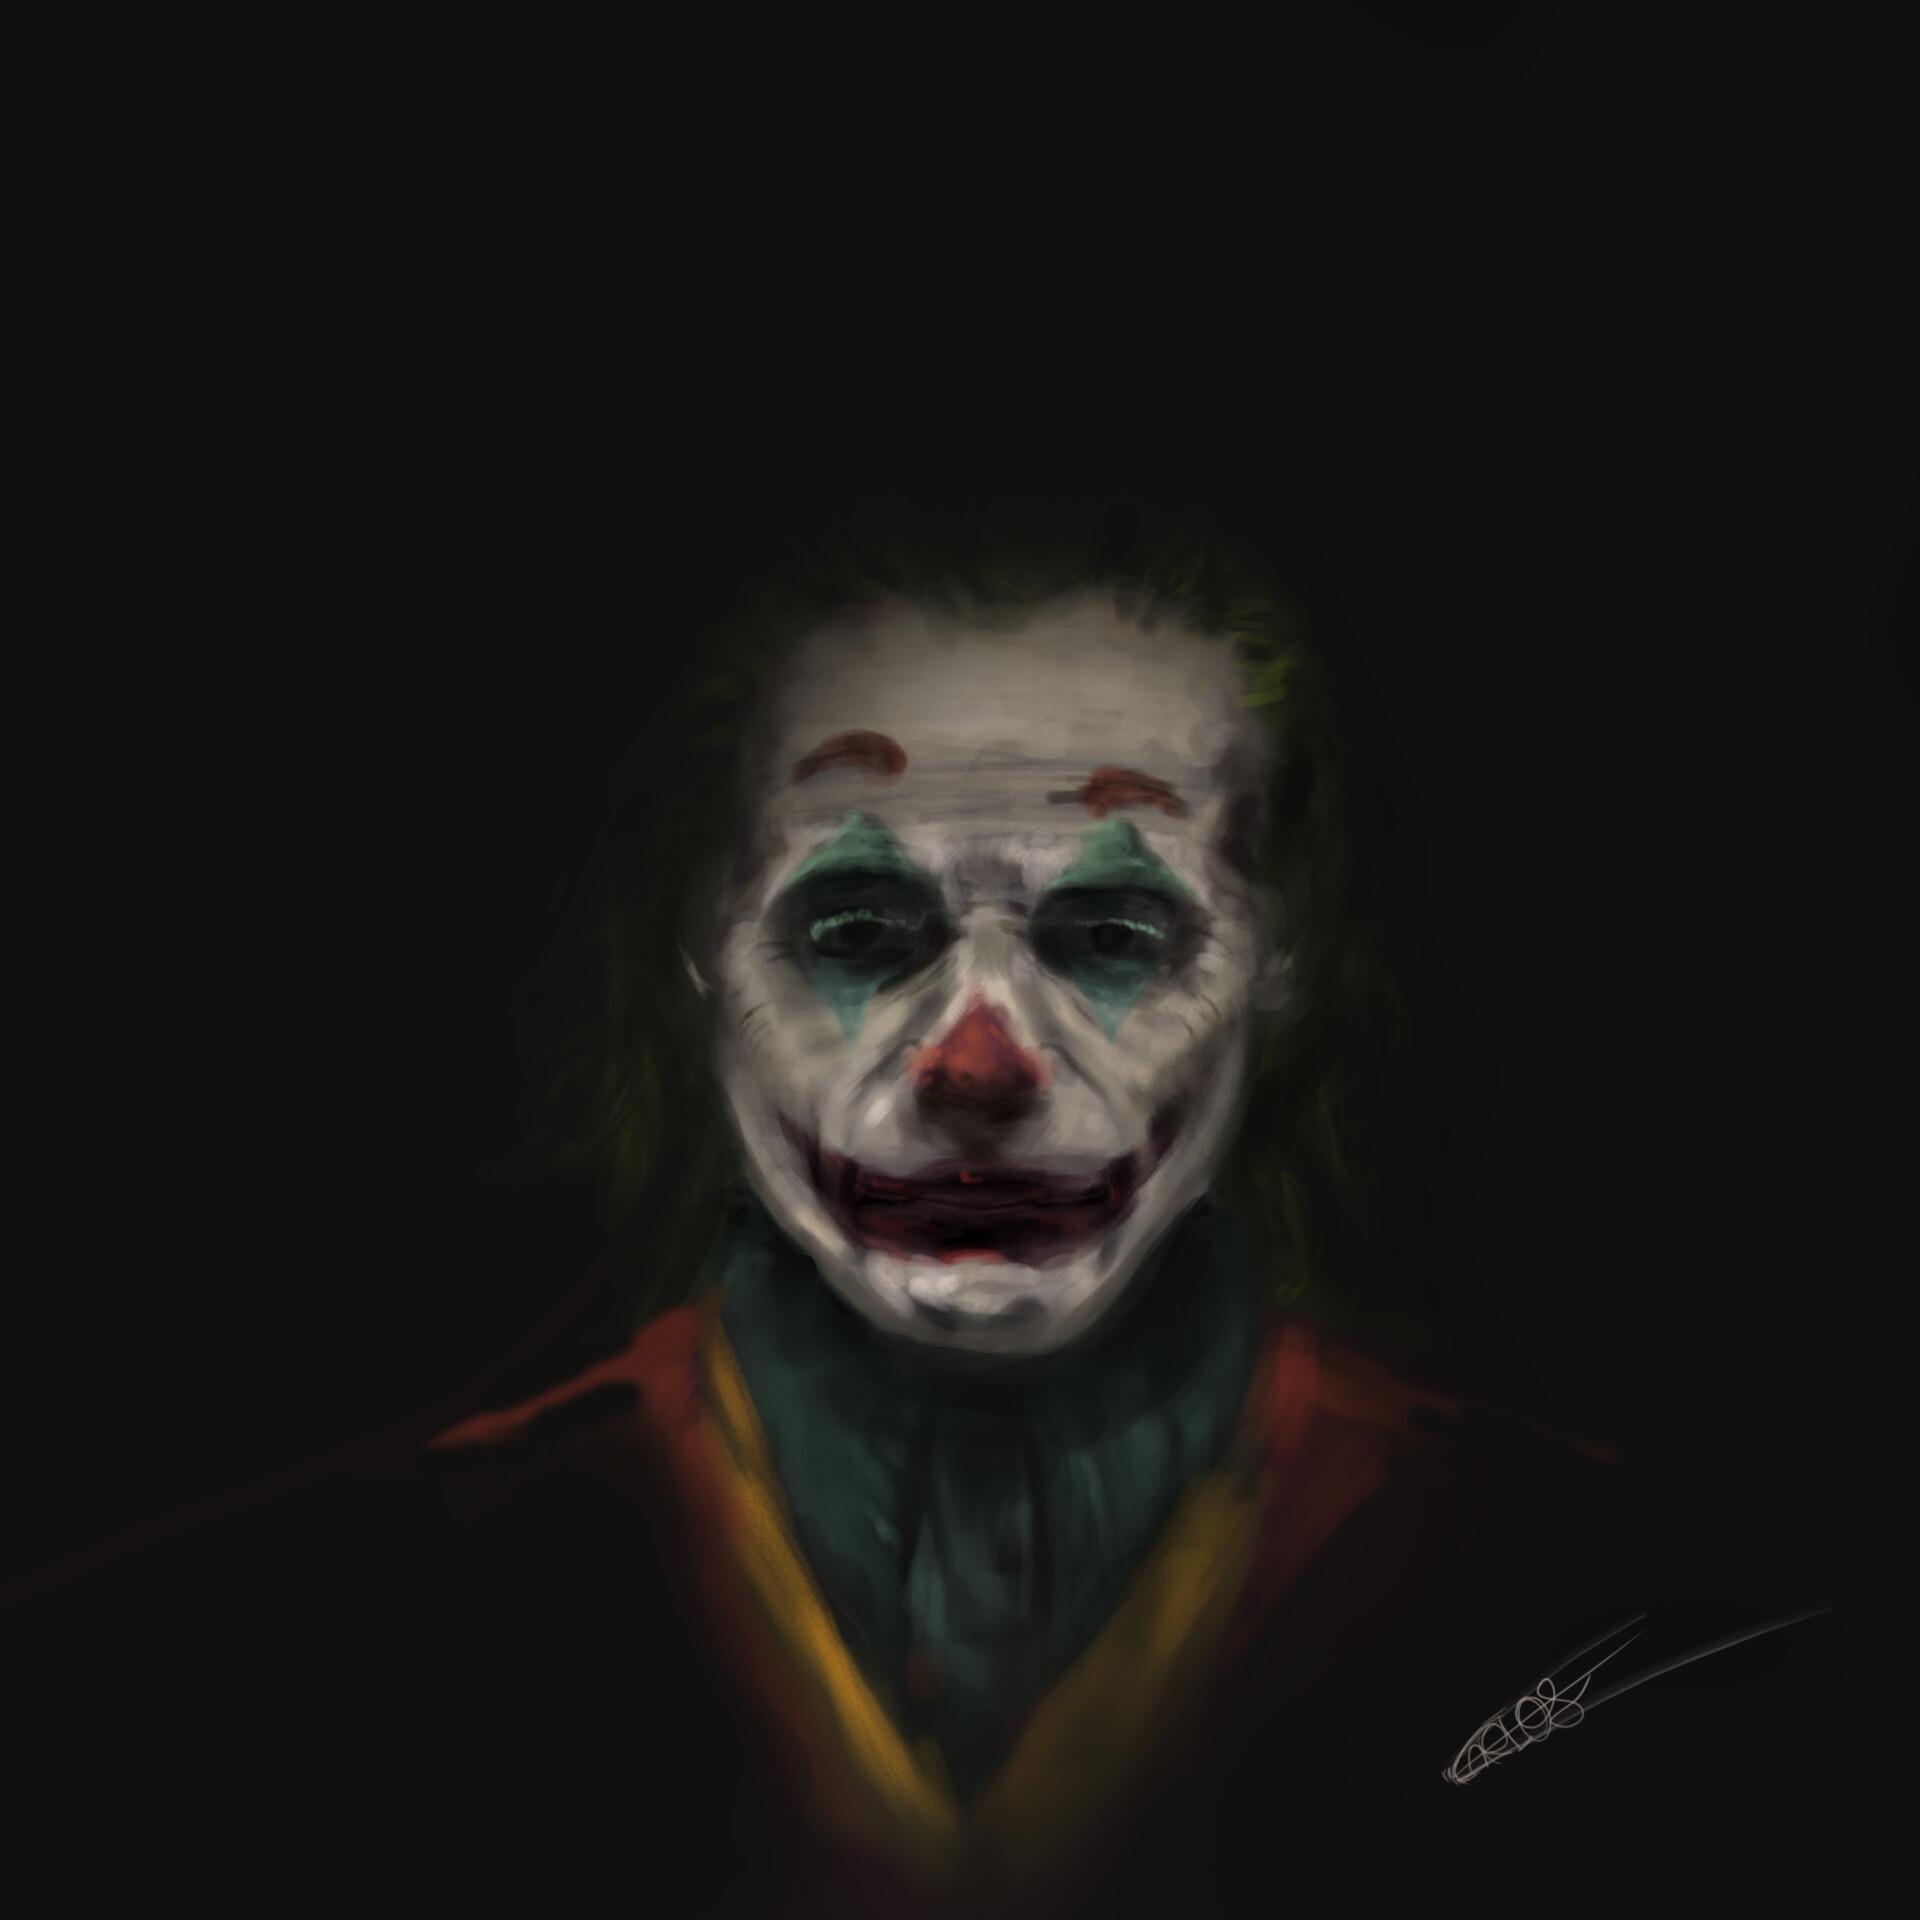 Joker Amoled Wallpapers - Top Free Joker Amoled Backgrounds ...